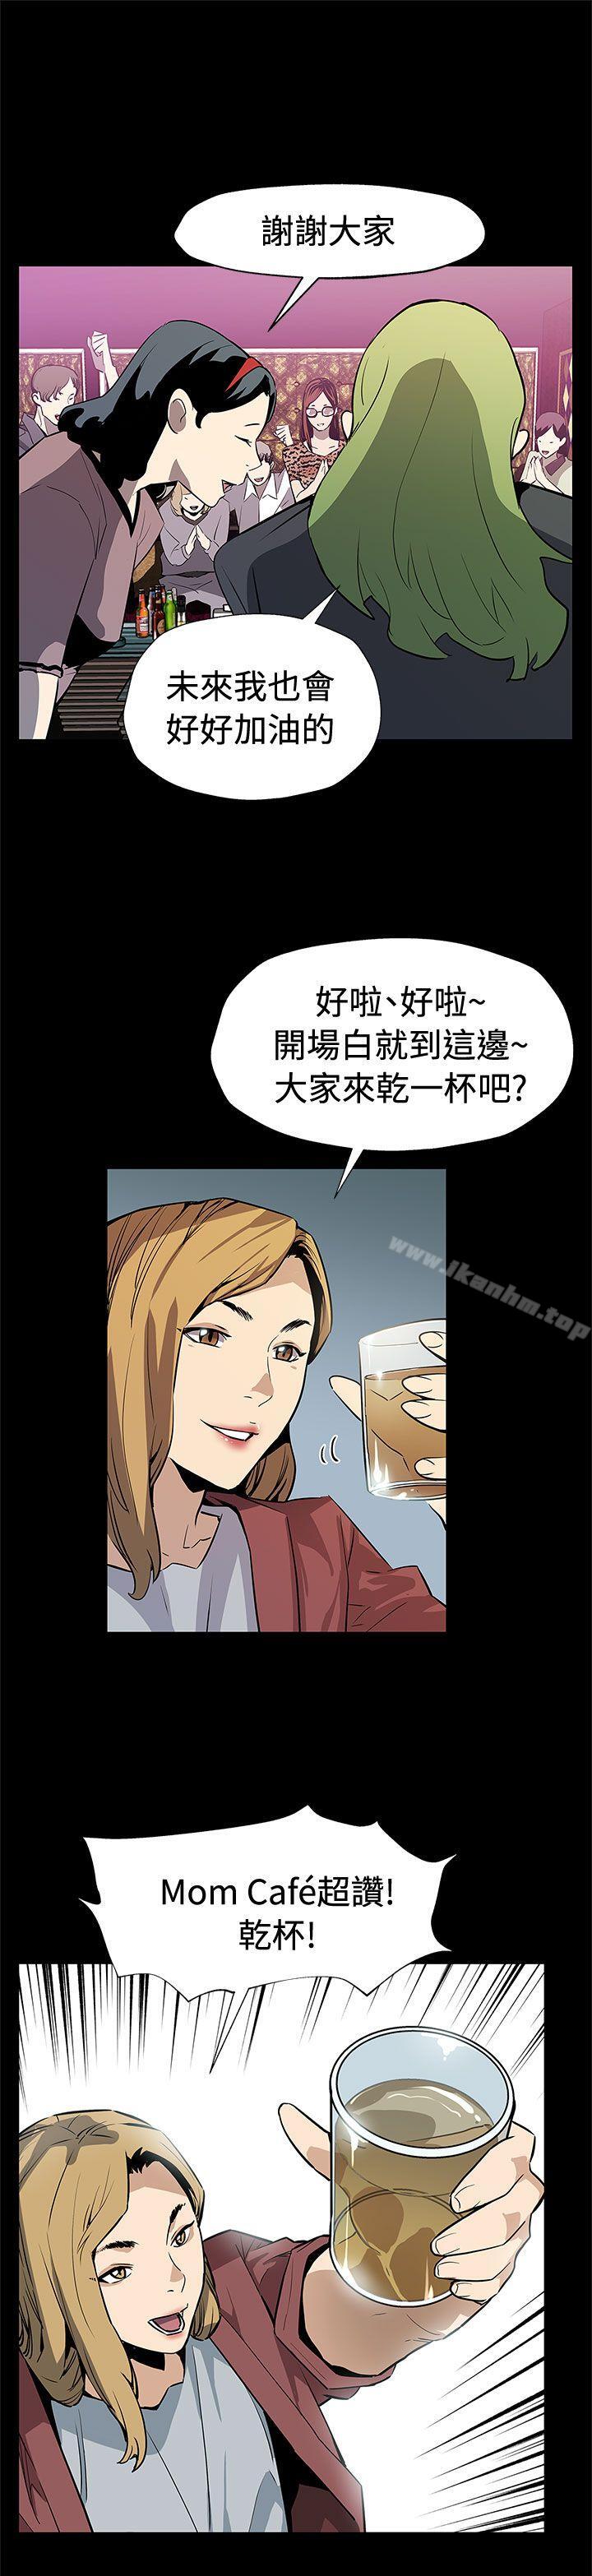 韩漫H漫画 Mom cafe  - 点击阅读 Mom cafe 后记 6